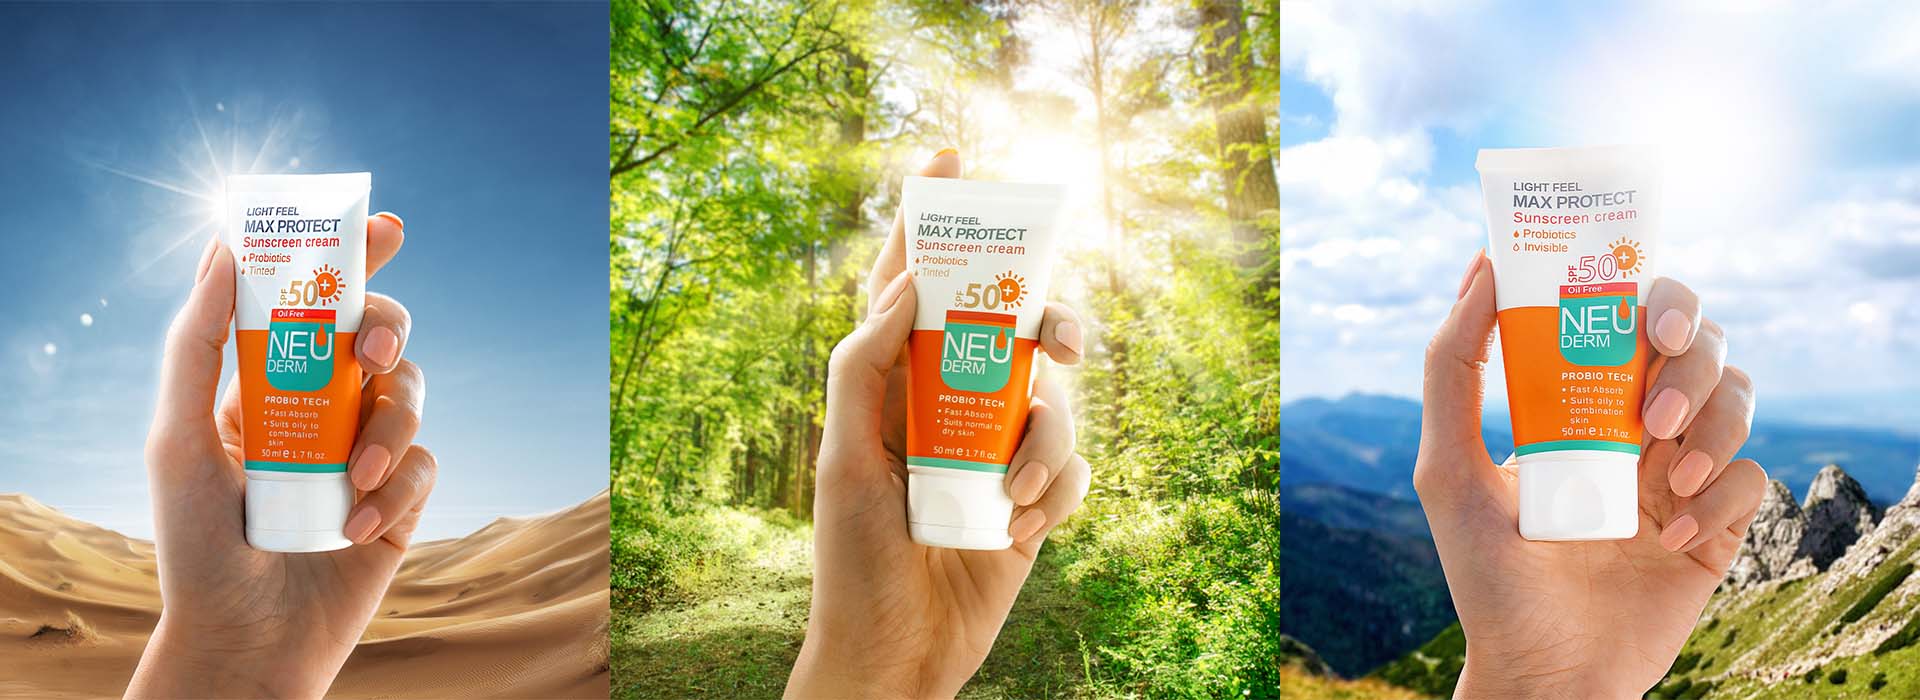 Hands holding Neuderm sunscreen against three different backgorunds: desert, forest and mountains